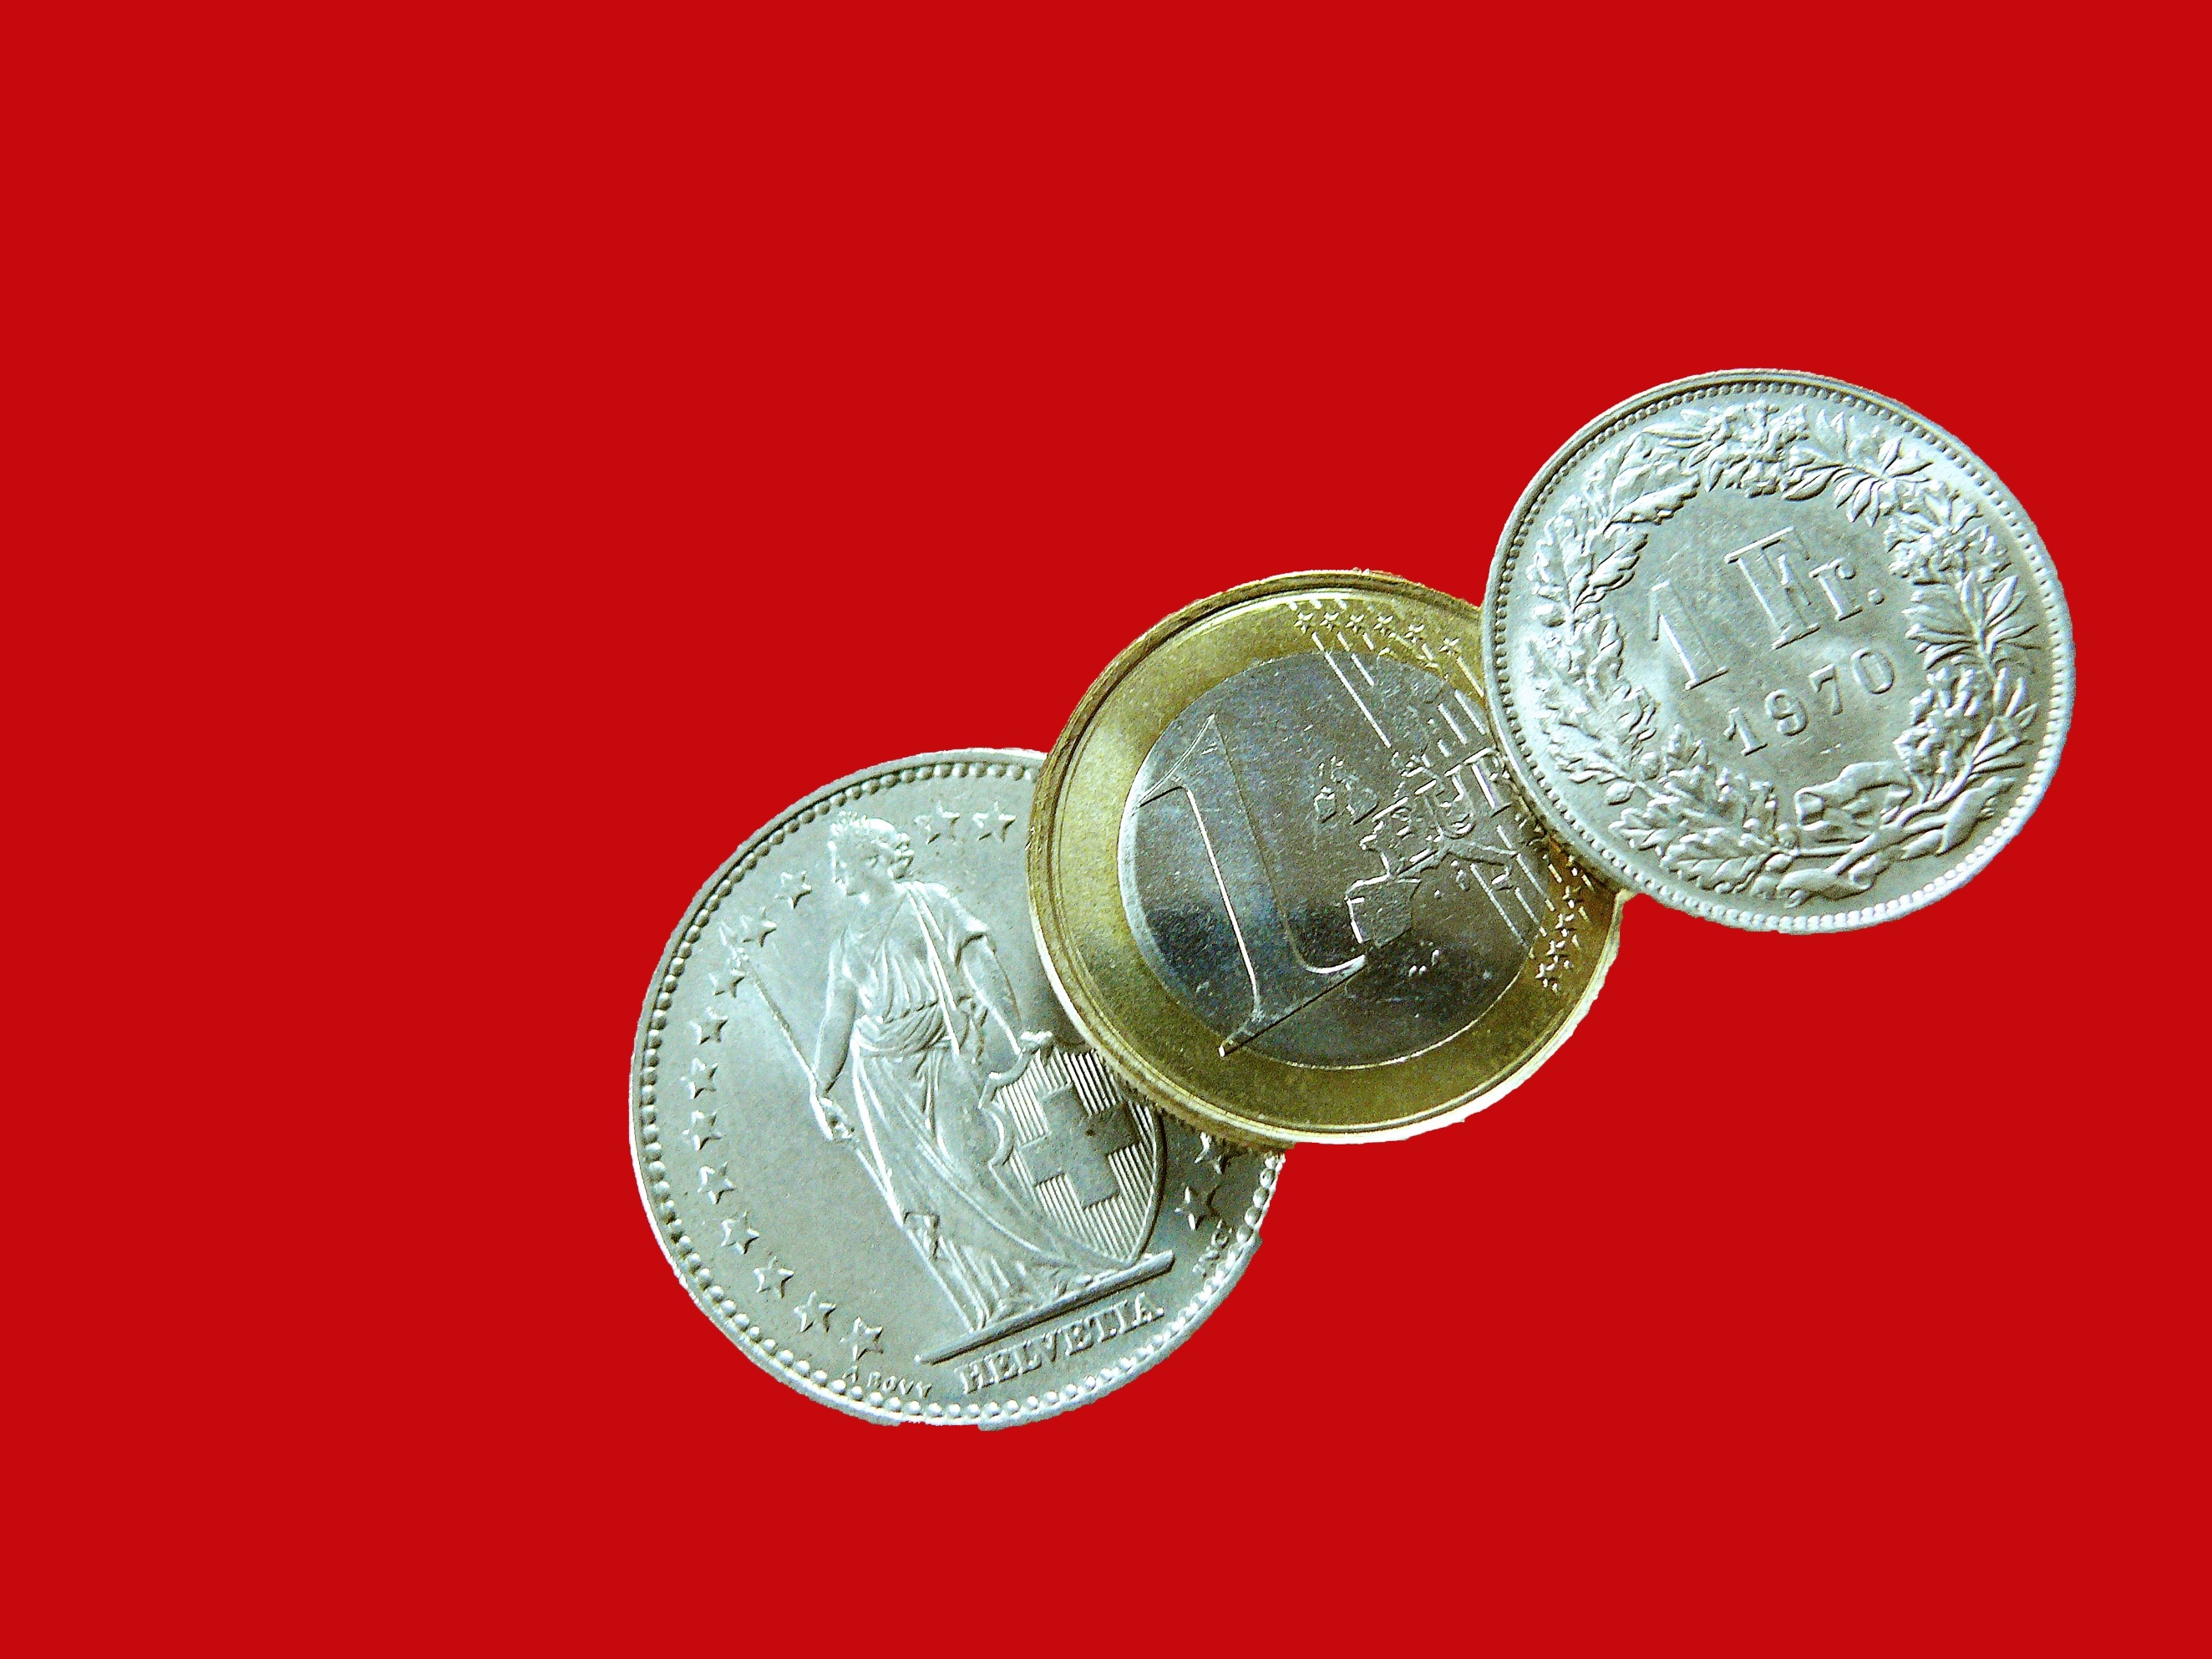 3 commemorative coins